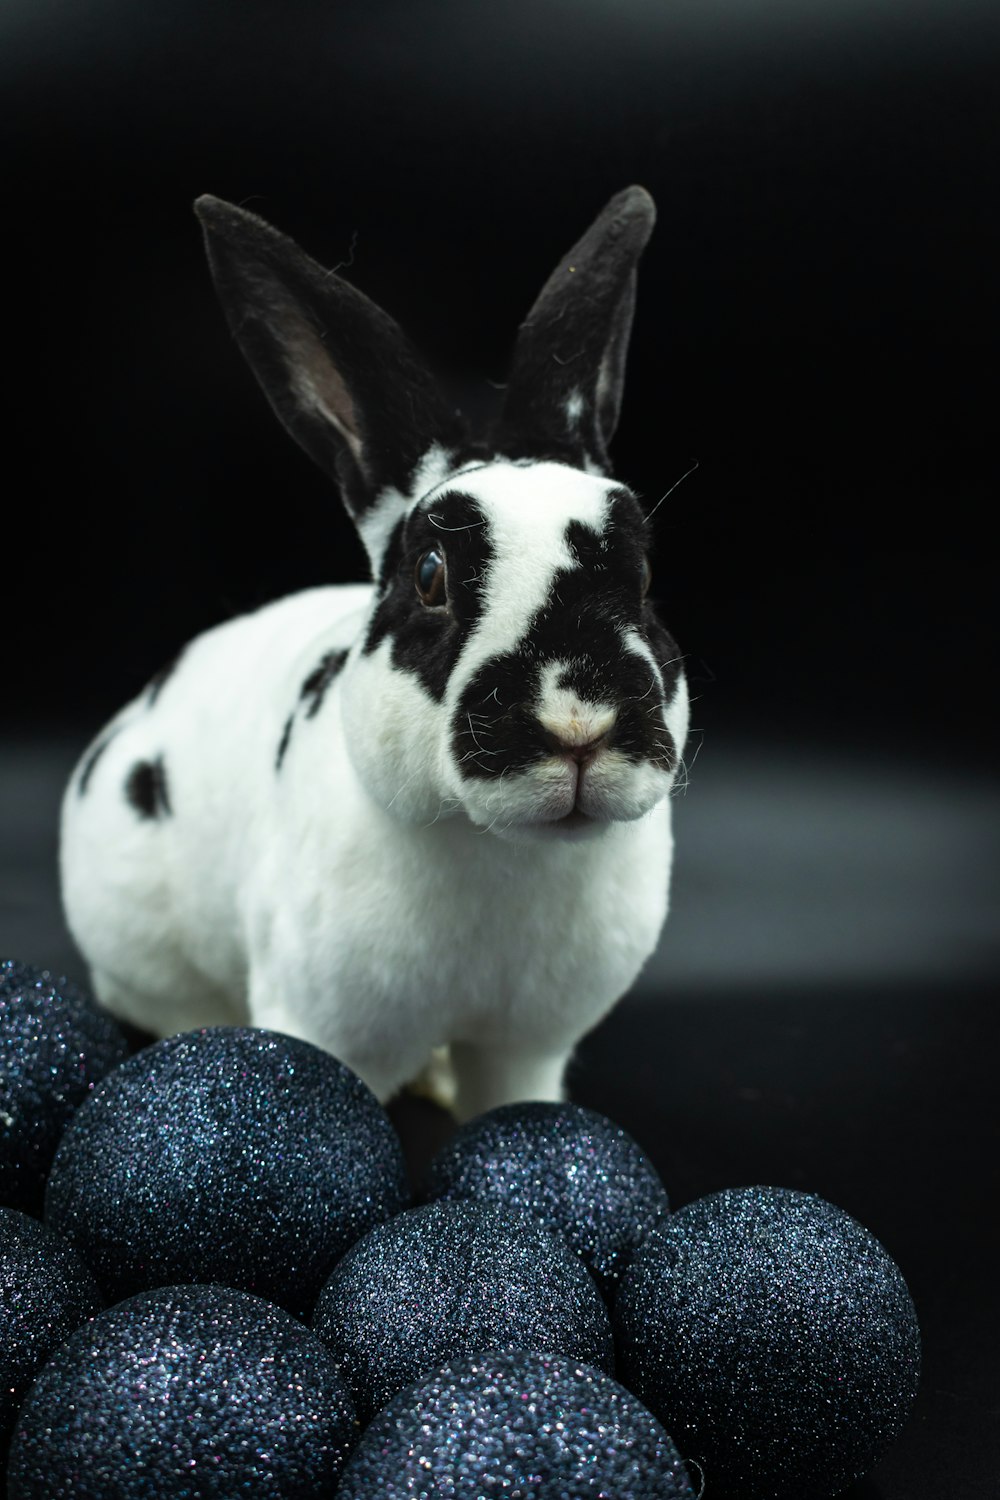 a black and white rabbit sitting next to blue balls